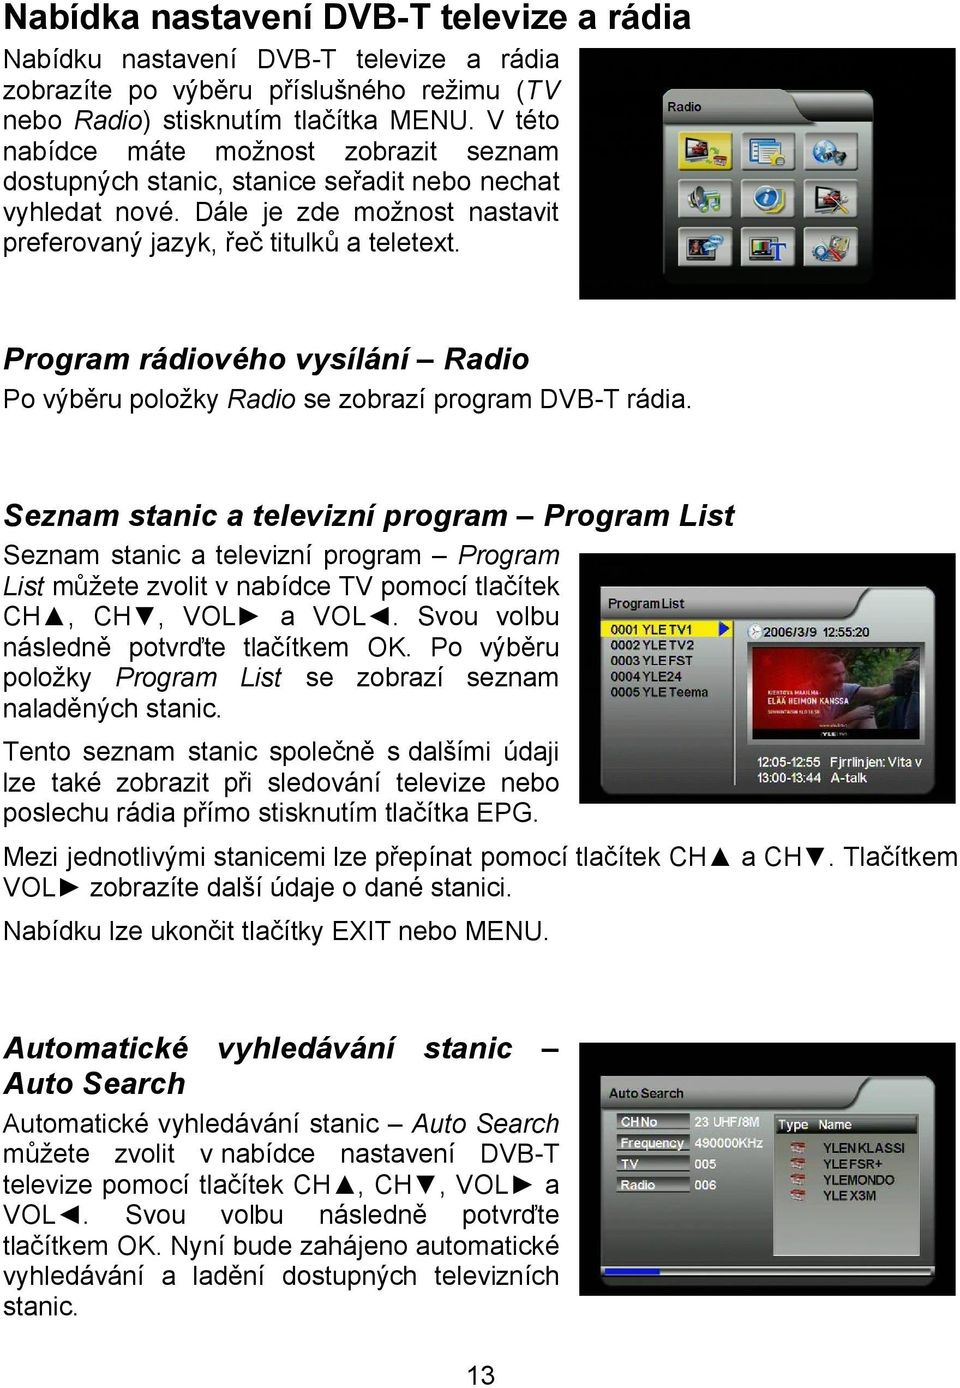 Program rádiového vysílání Radio Po výběru položky Radio se zobrazí program DVB-T rádia.